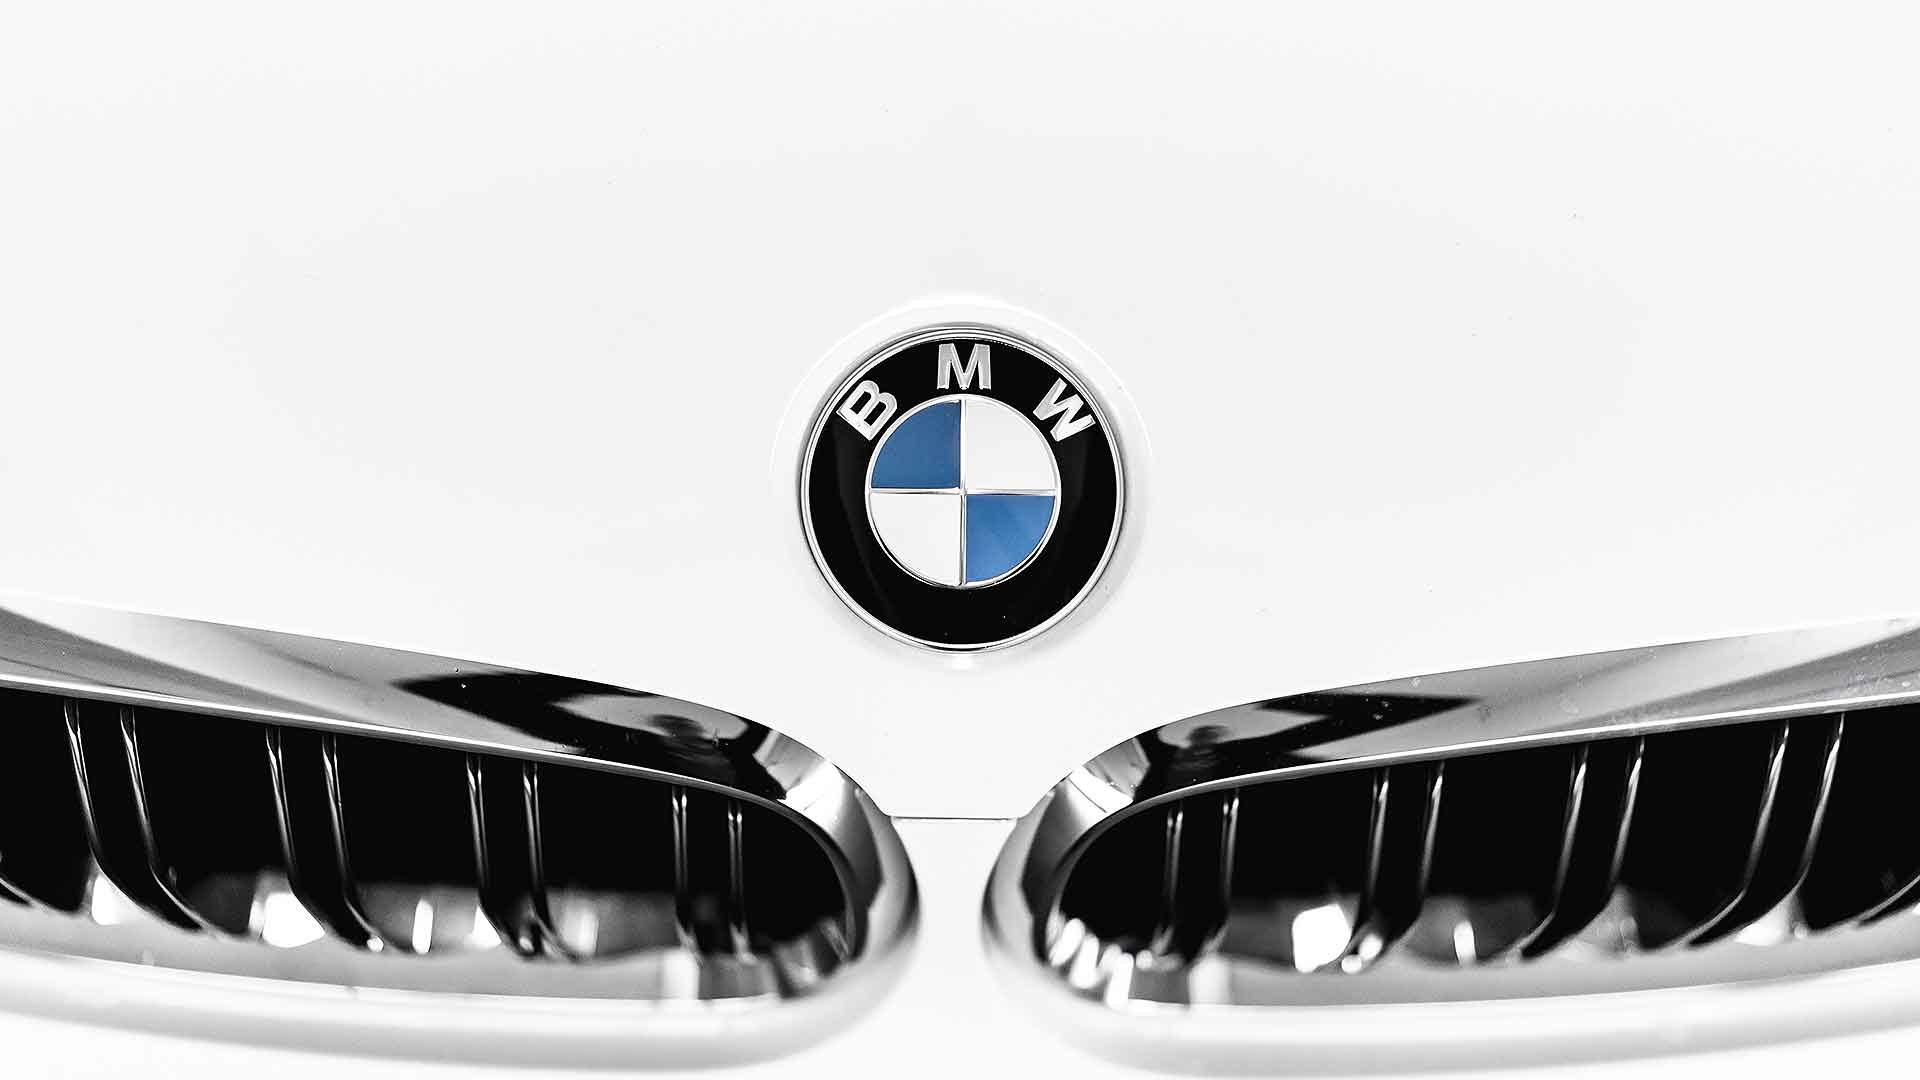 BMW badge on a white car